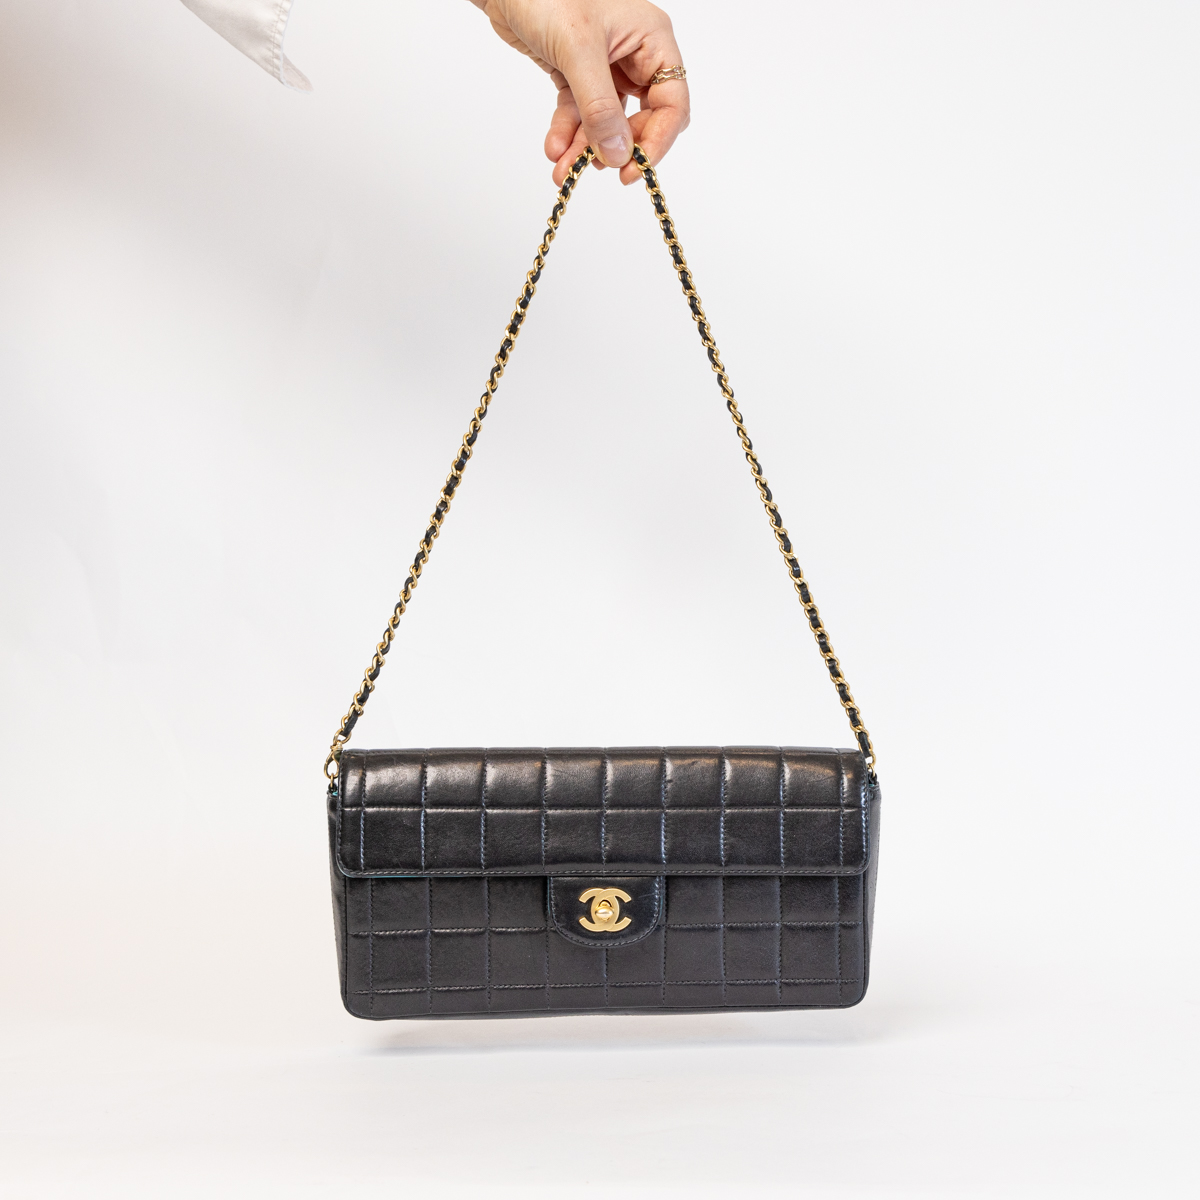 Chanel Classic Baguette Tasche Schwarz mit goldener Hardware